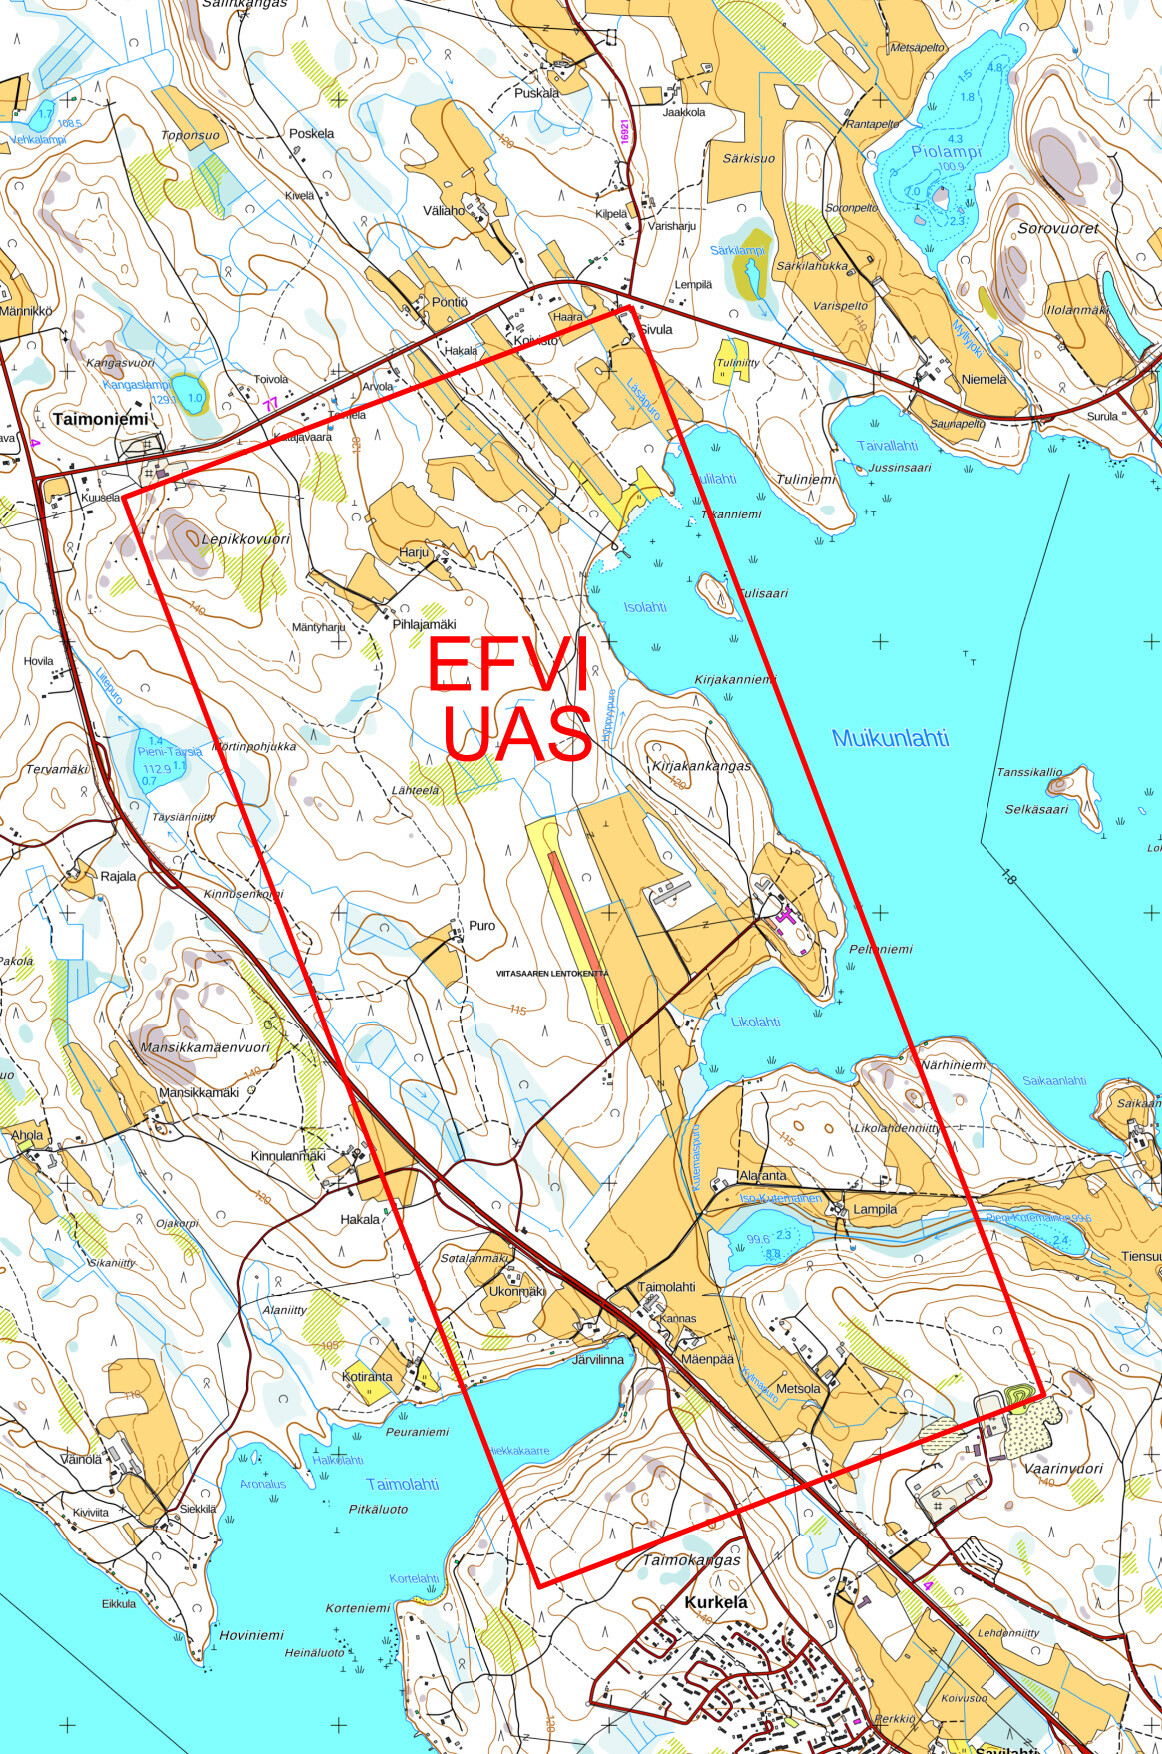 Viitasaari (EFVI) restrictive UAS geographical zone | Droneinfo